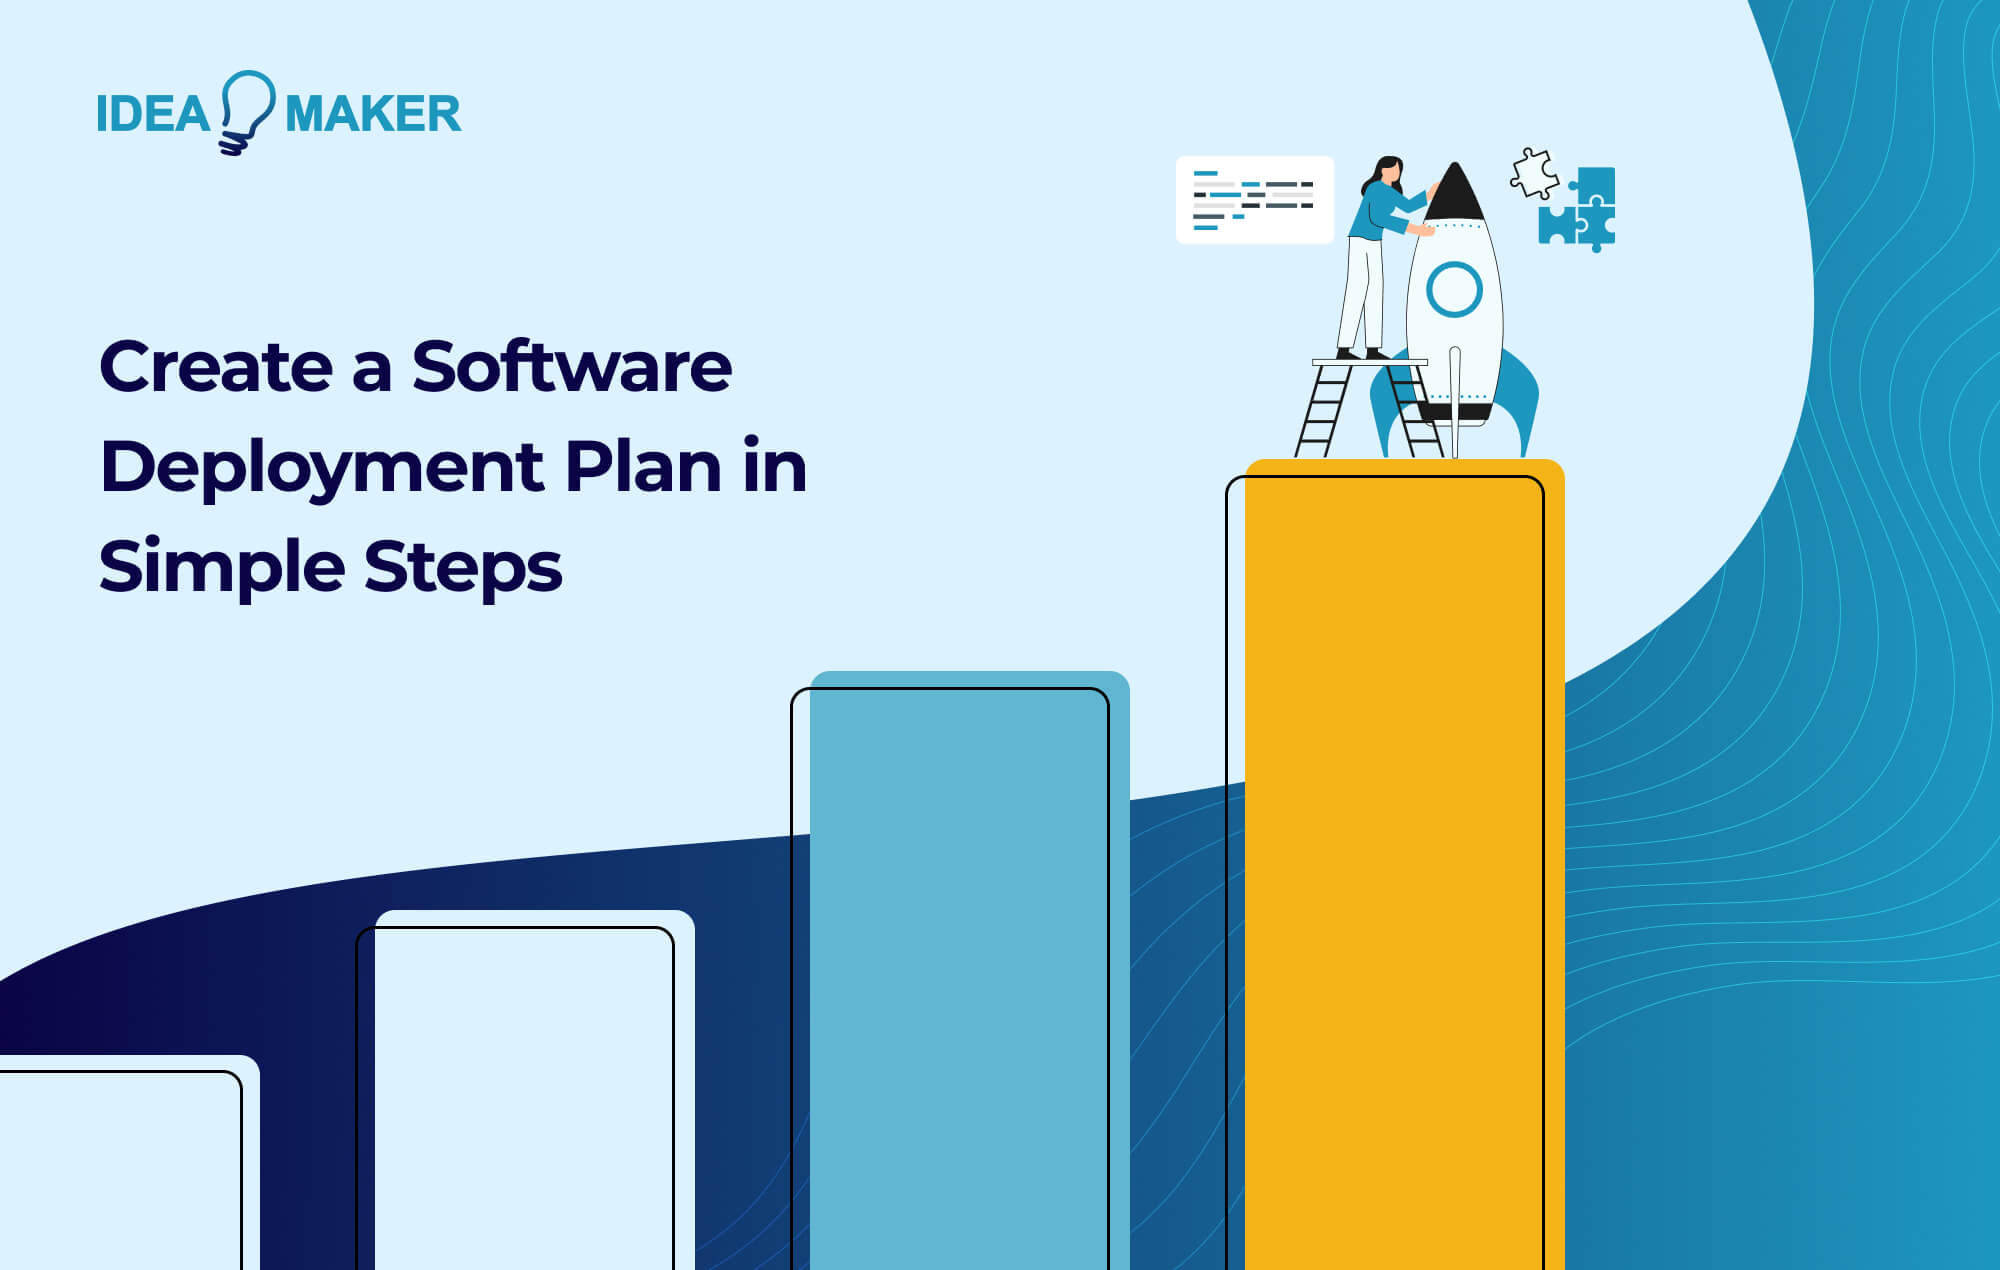 Ideamaker - Create a Software Deployment Plan in Simple Steps